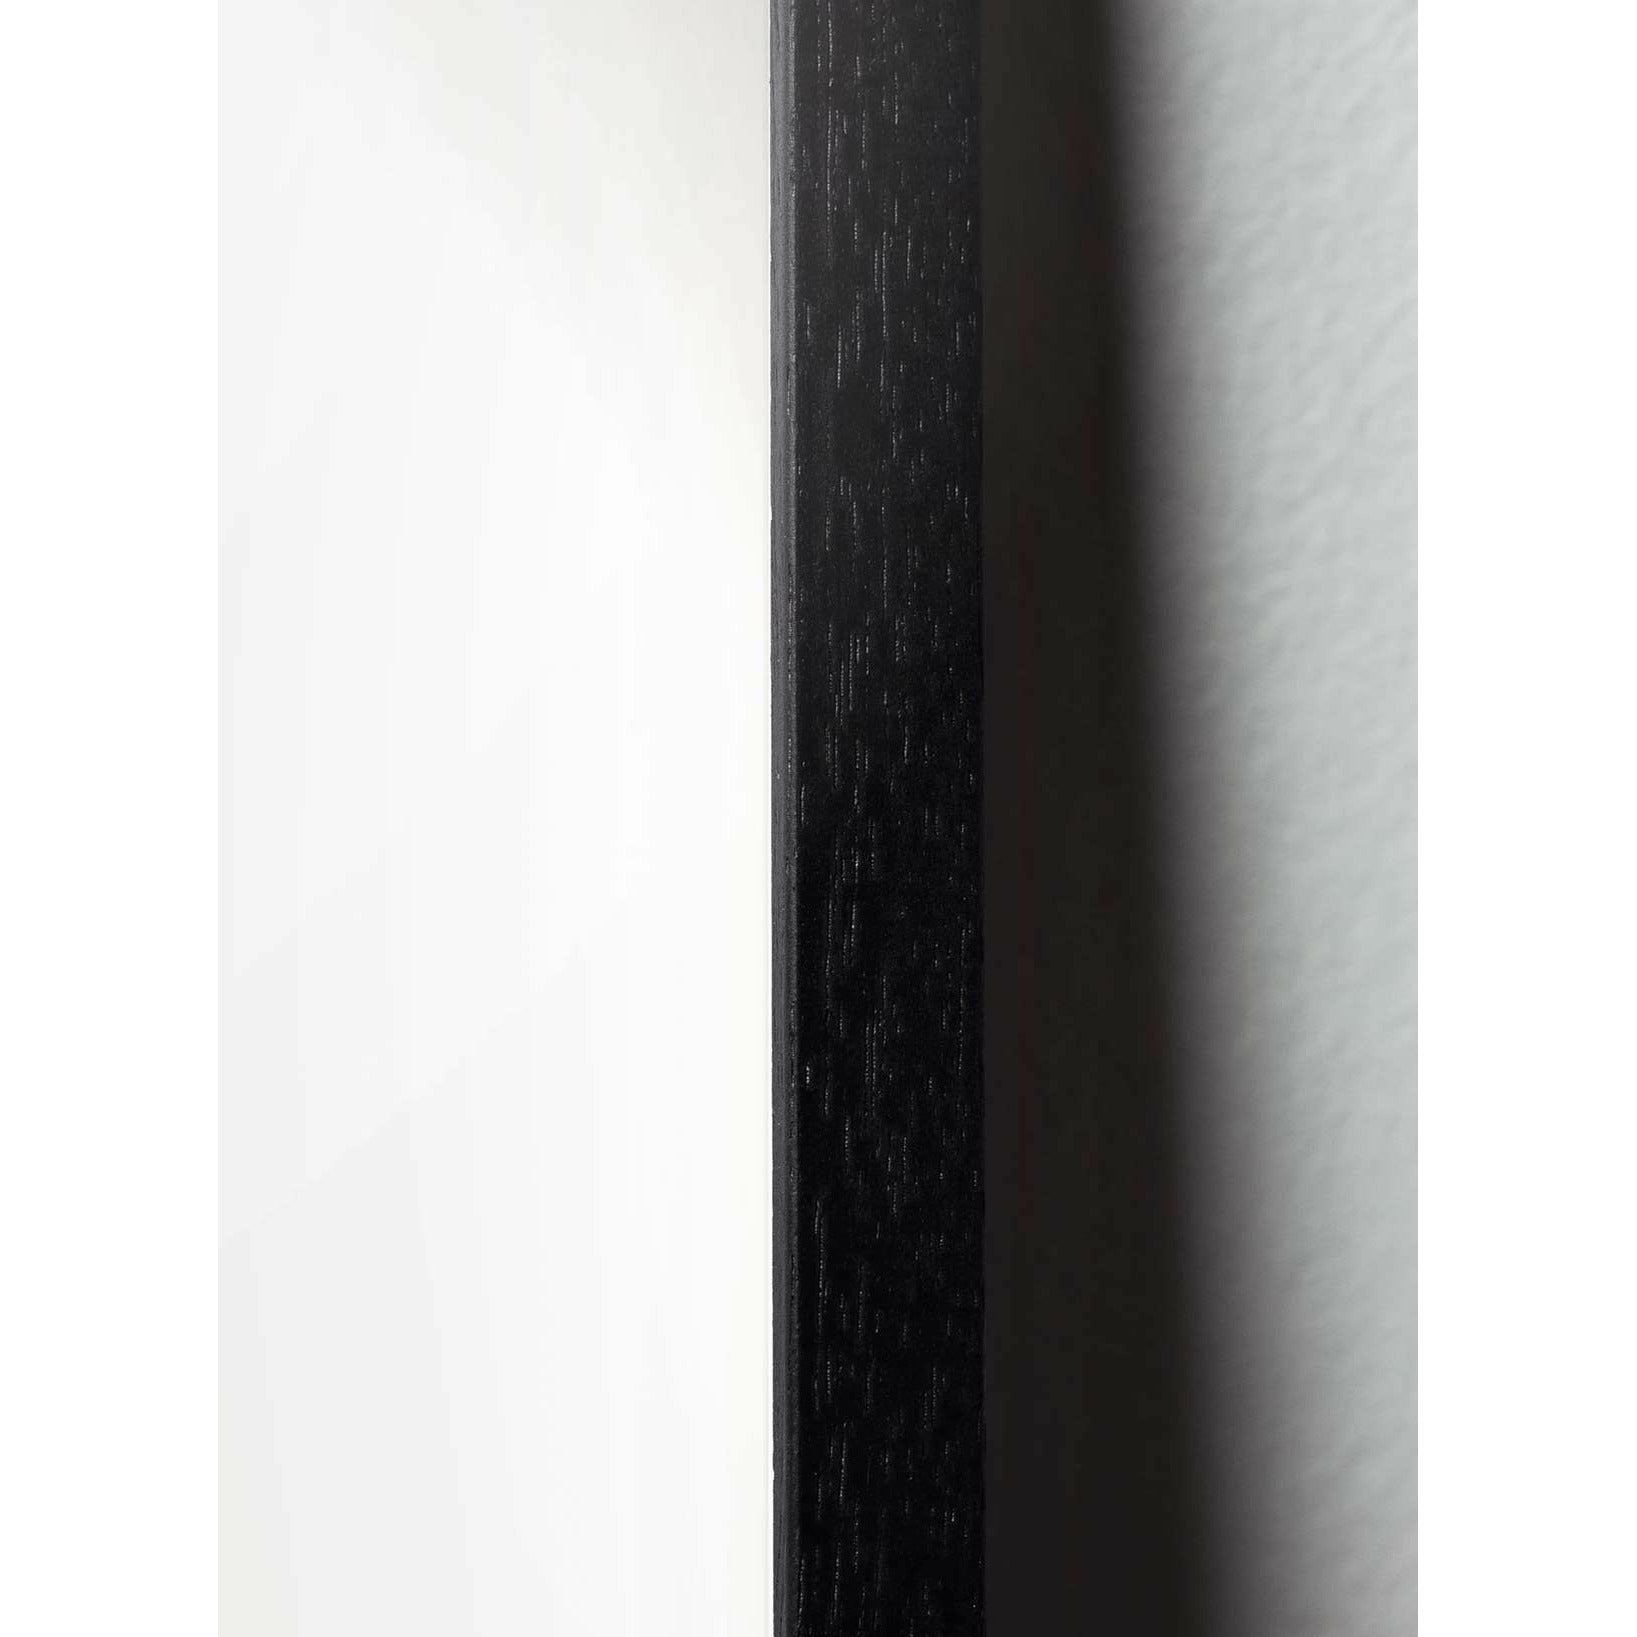 Brainchild Ant Design Icon Poster, Rahmen aus schwarz lackiertem Holz 50 X70 cm, grau